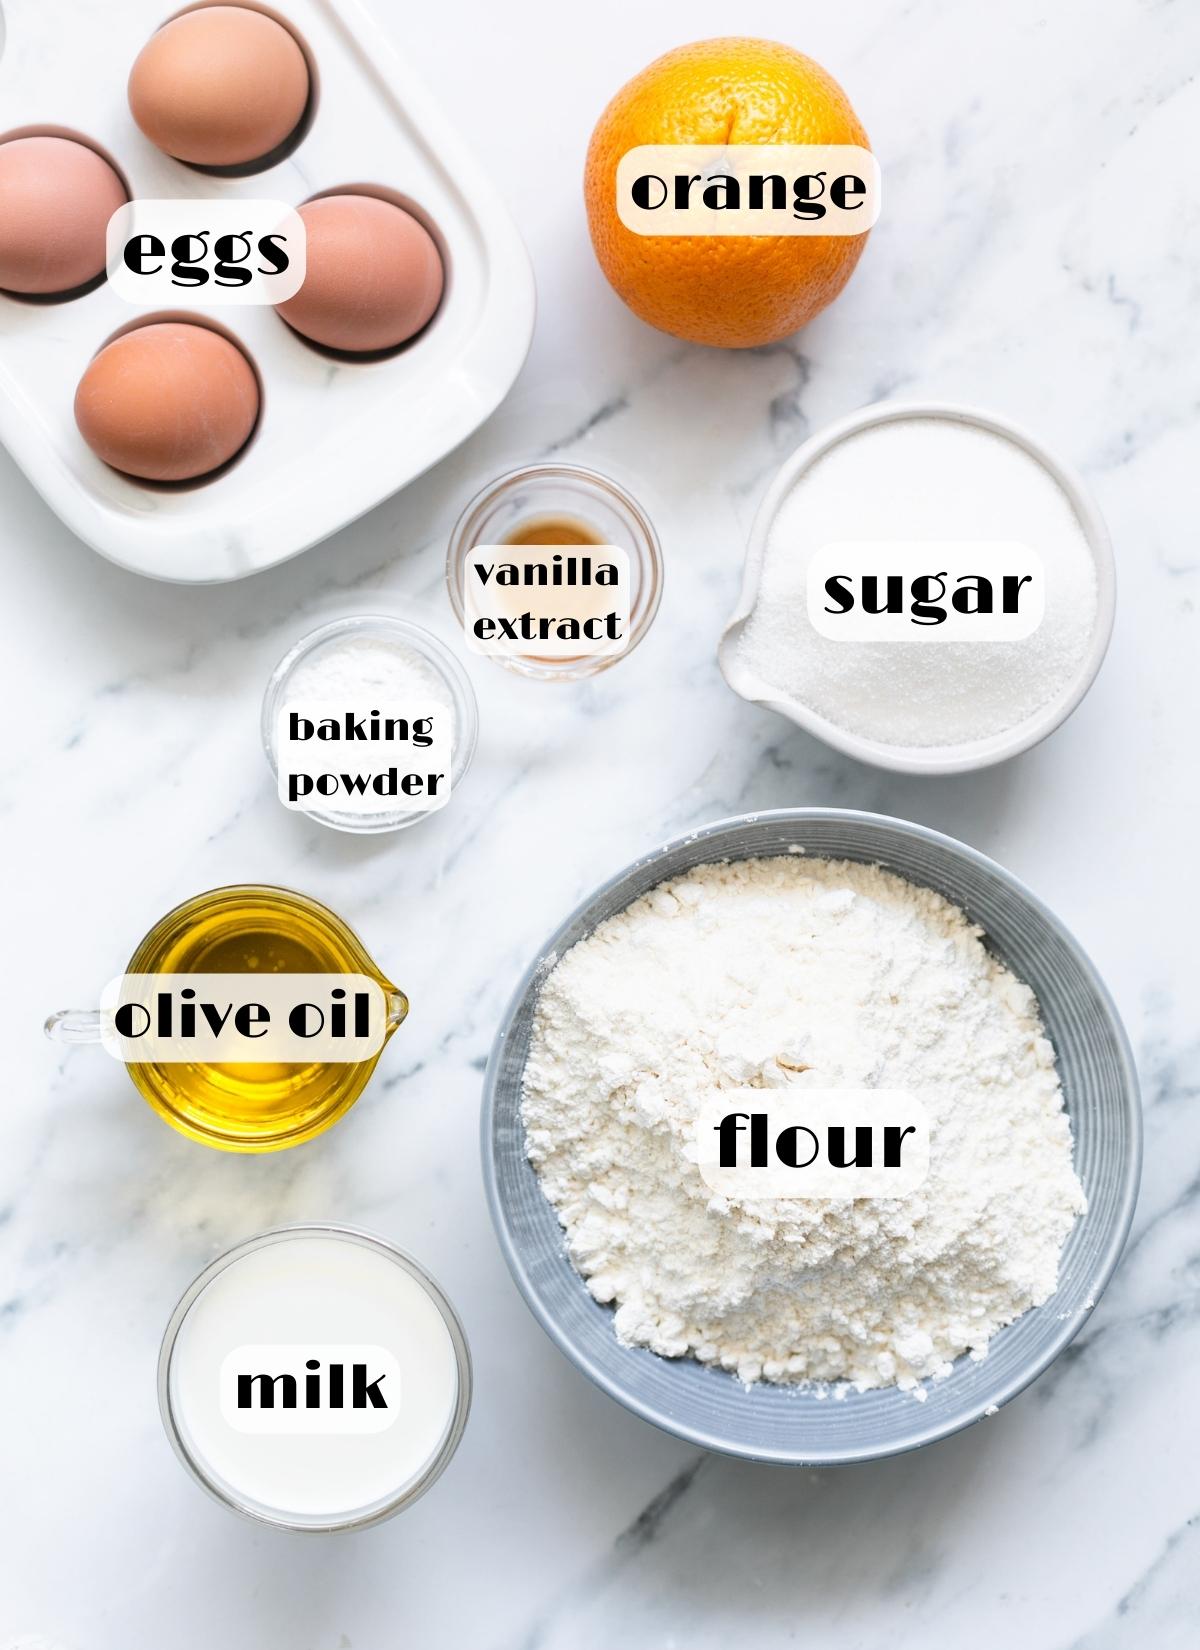 ciambellone ingredients: flour, sugar, orange, eggs, olive oil, milk, baking powder, vanilla extract.